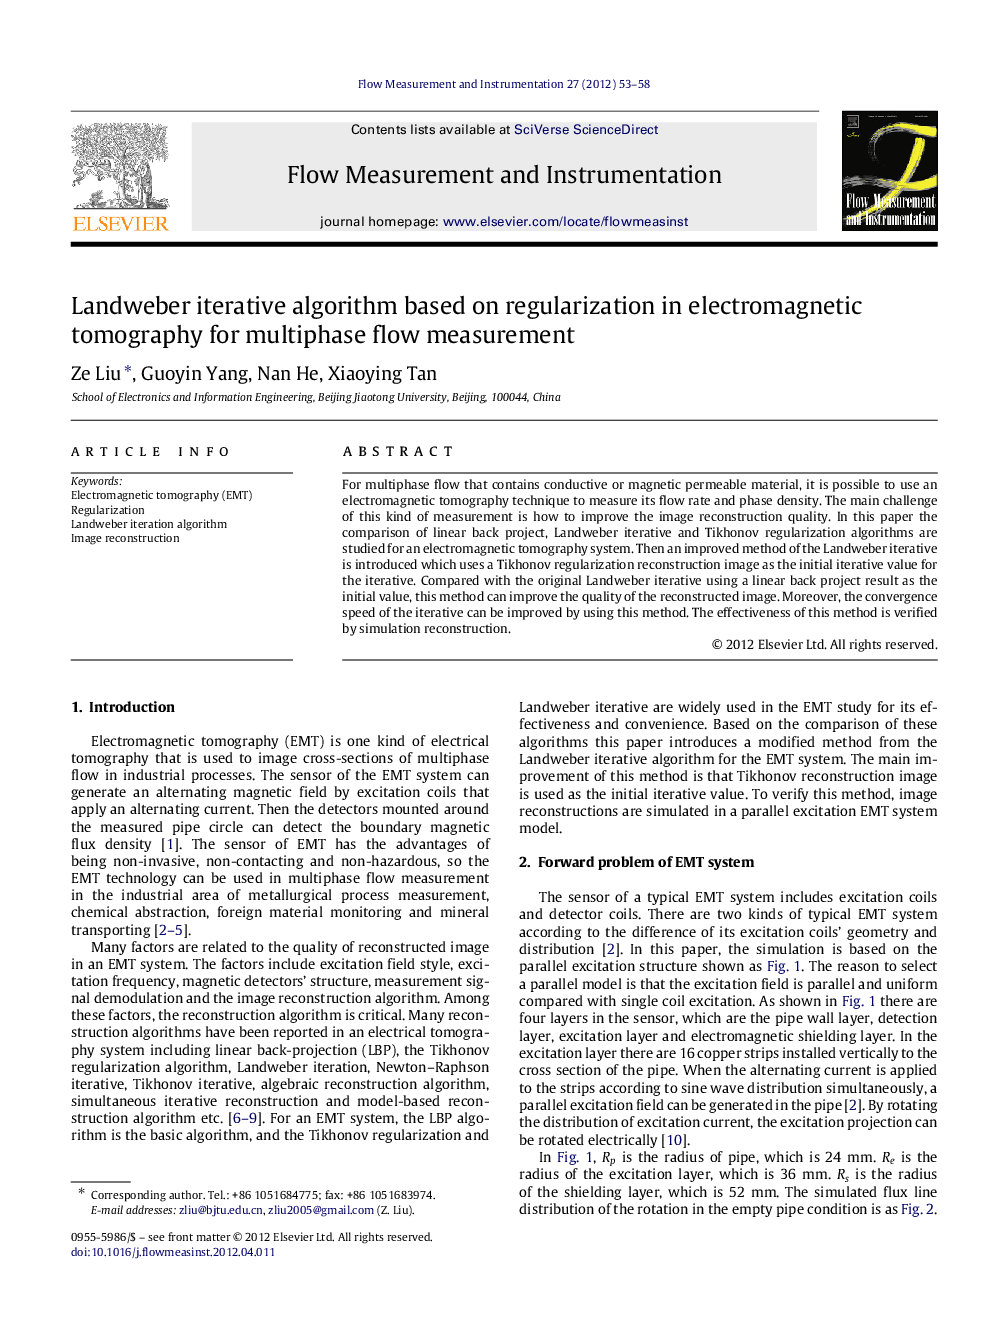 Landweber iterative algorithm based on regularization in electromagnetic tomography for multiphase flow measurement